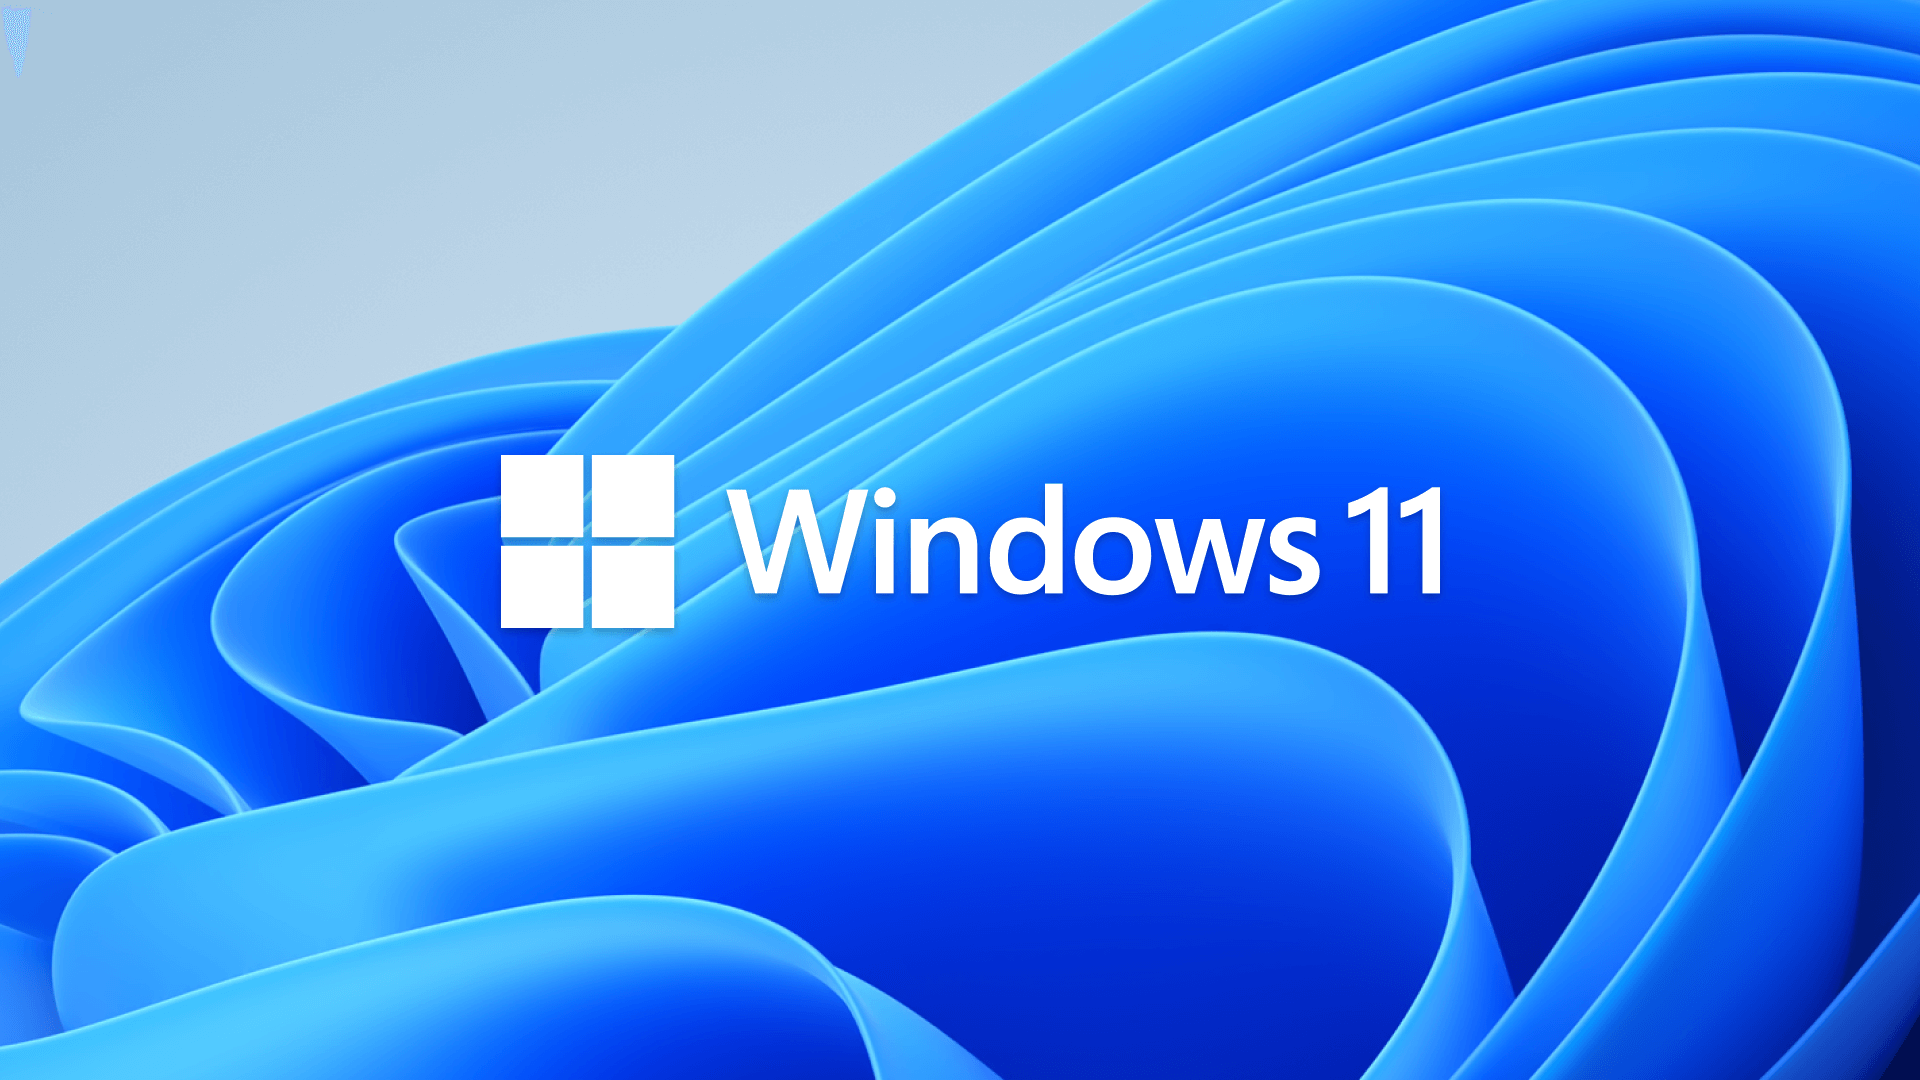 Windows11 壁紙 全32種類 がダウンロード可能に 高画質